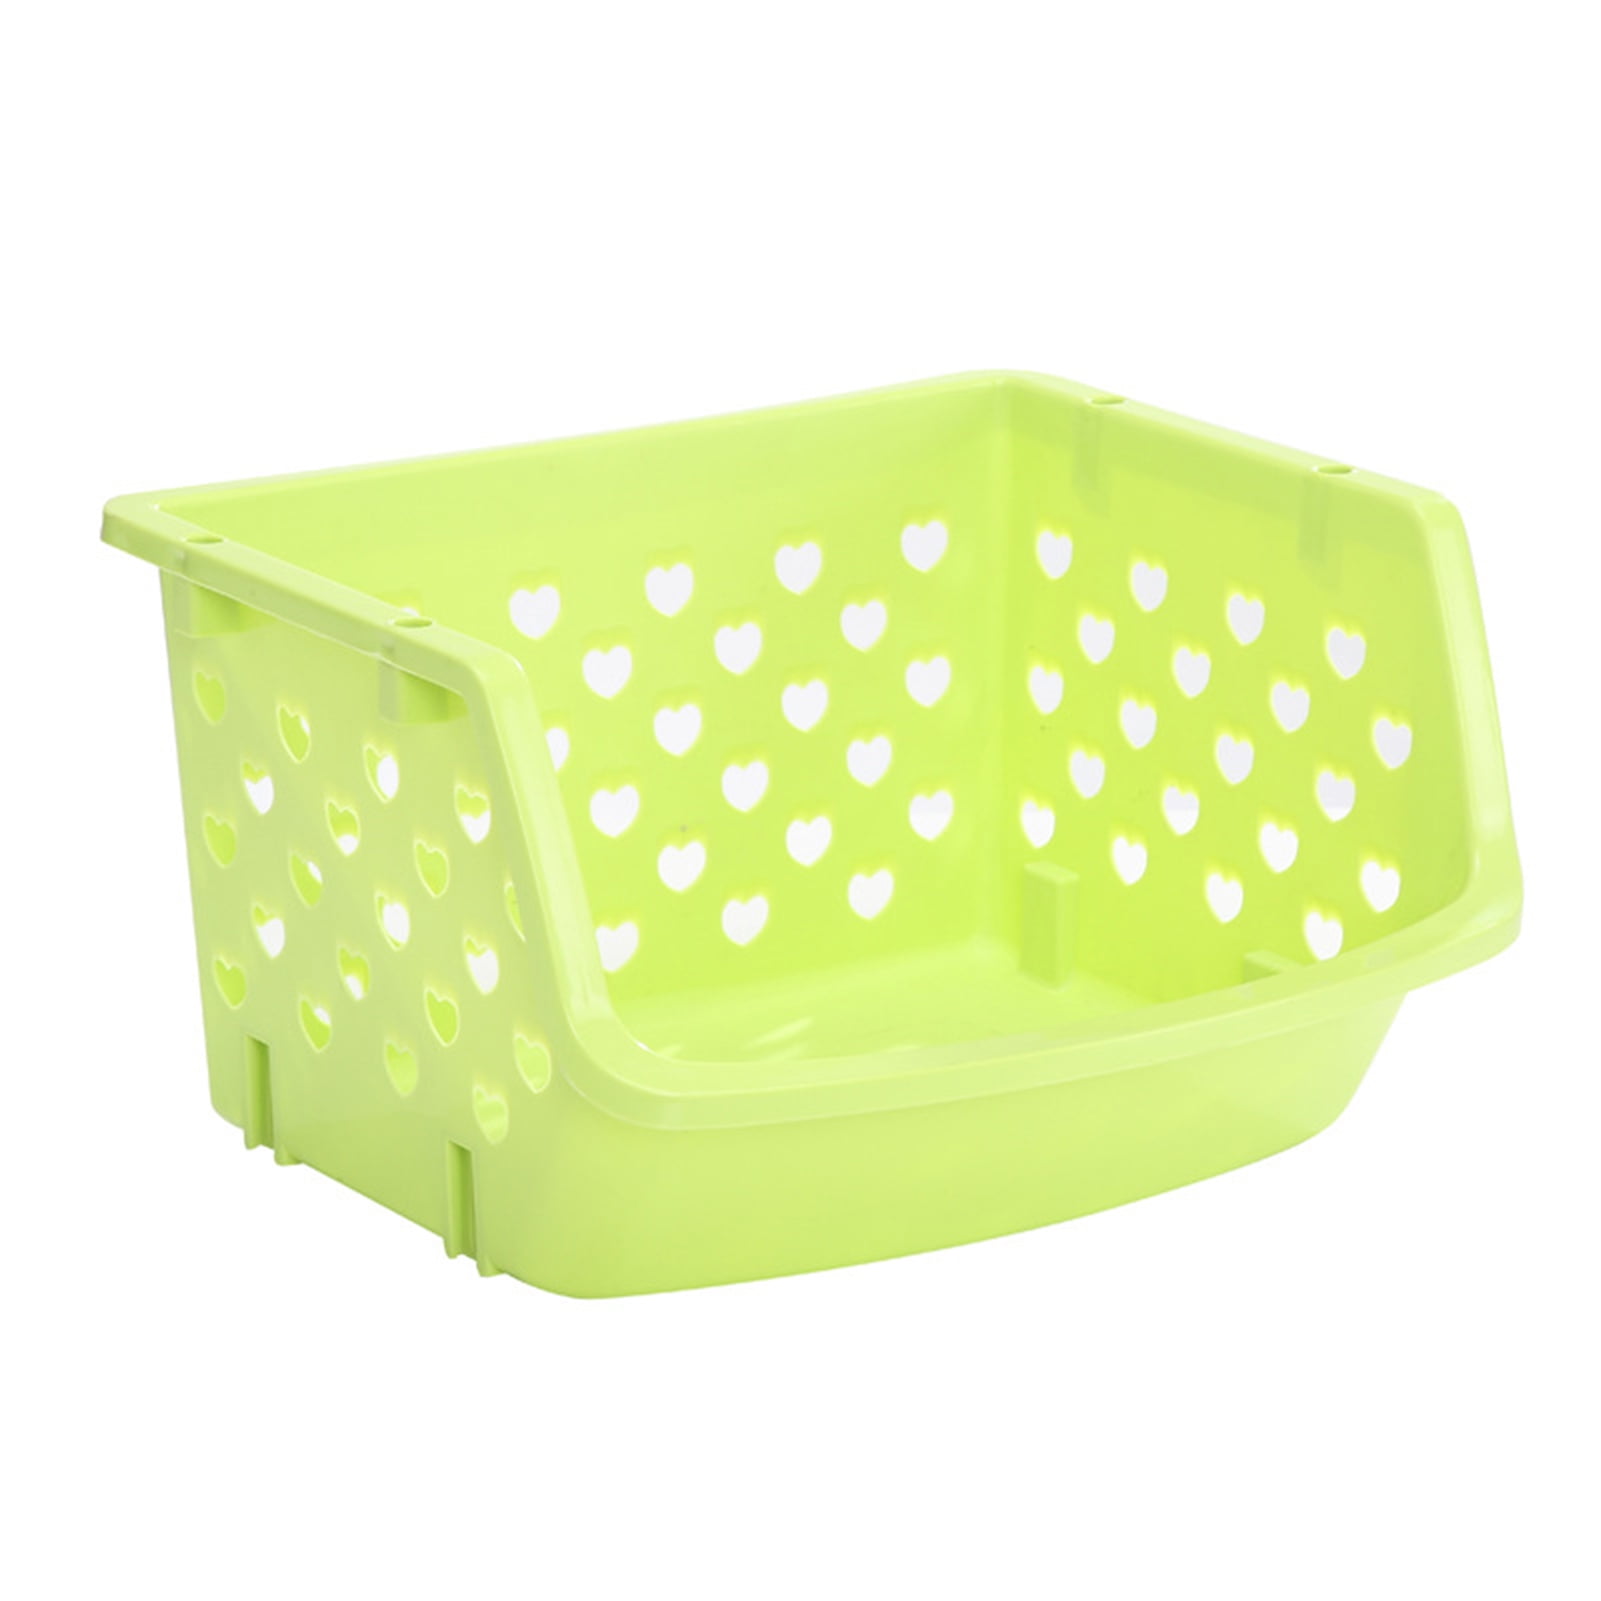 HOMRELA Stackable Storage Bins Cart Organizer Basket for Food,  Fruit,Snacks, Toys, Plastic Storage Baskets for Kitchen Cabinets, Closets,  Kitchen,Home